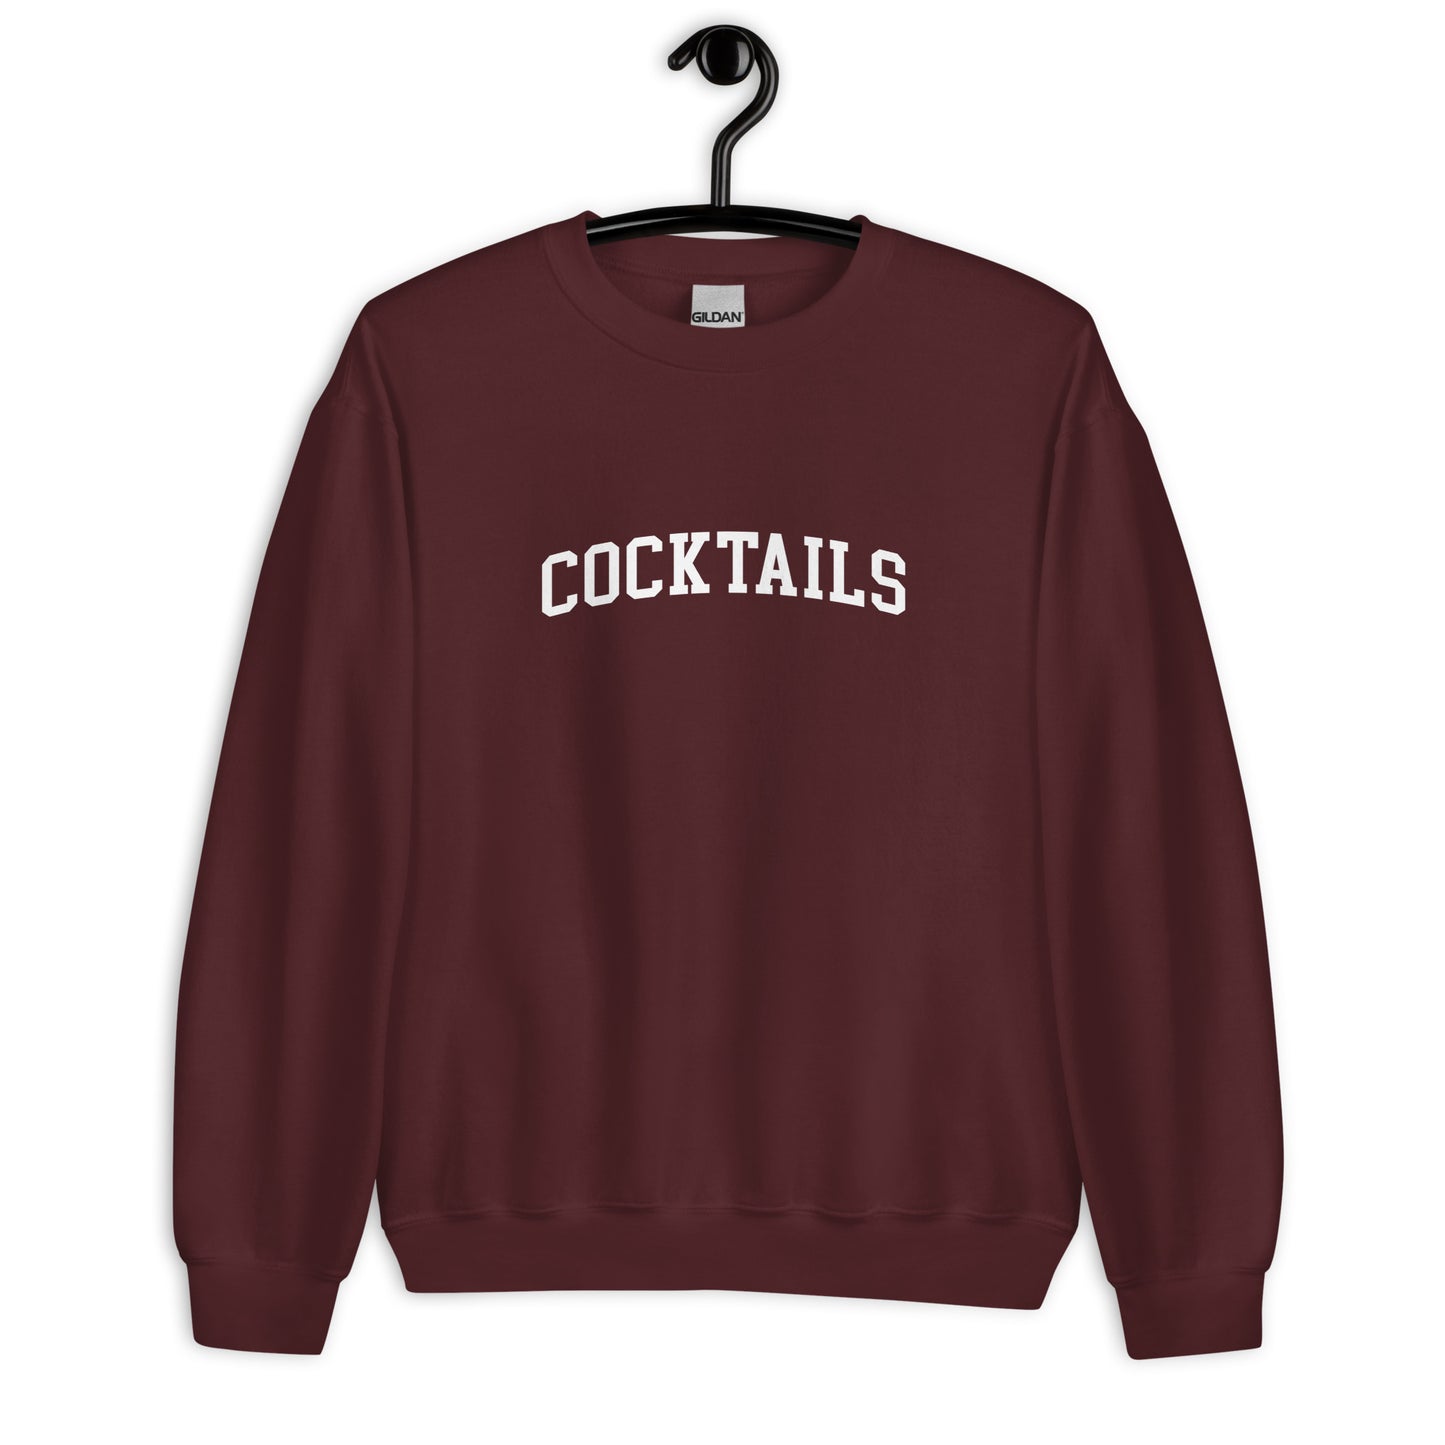 Cocktails Sweatshirt - Arched Font